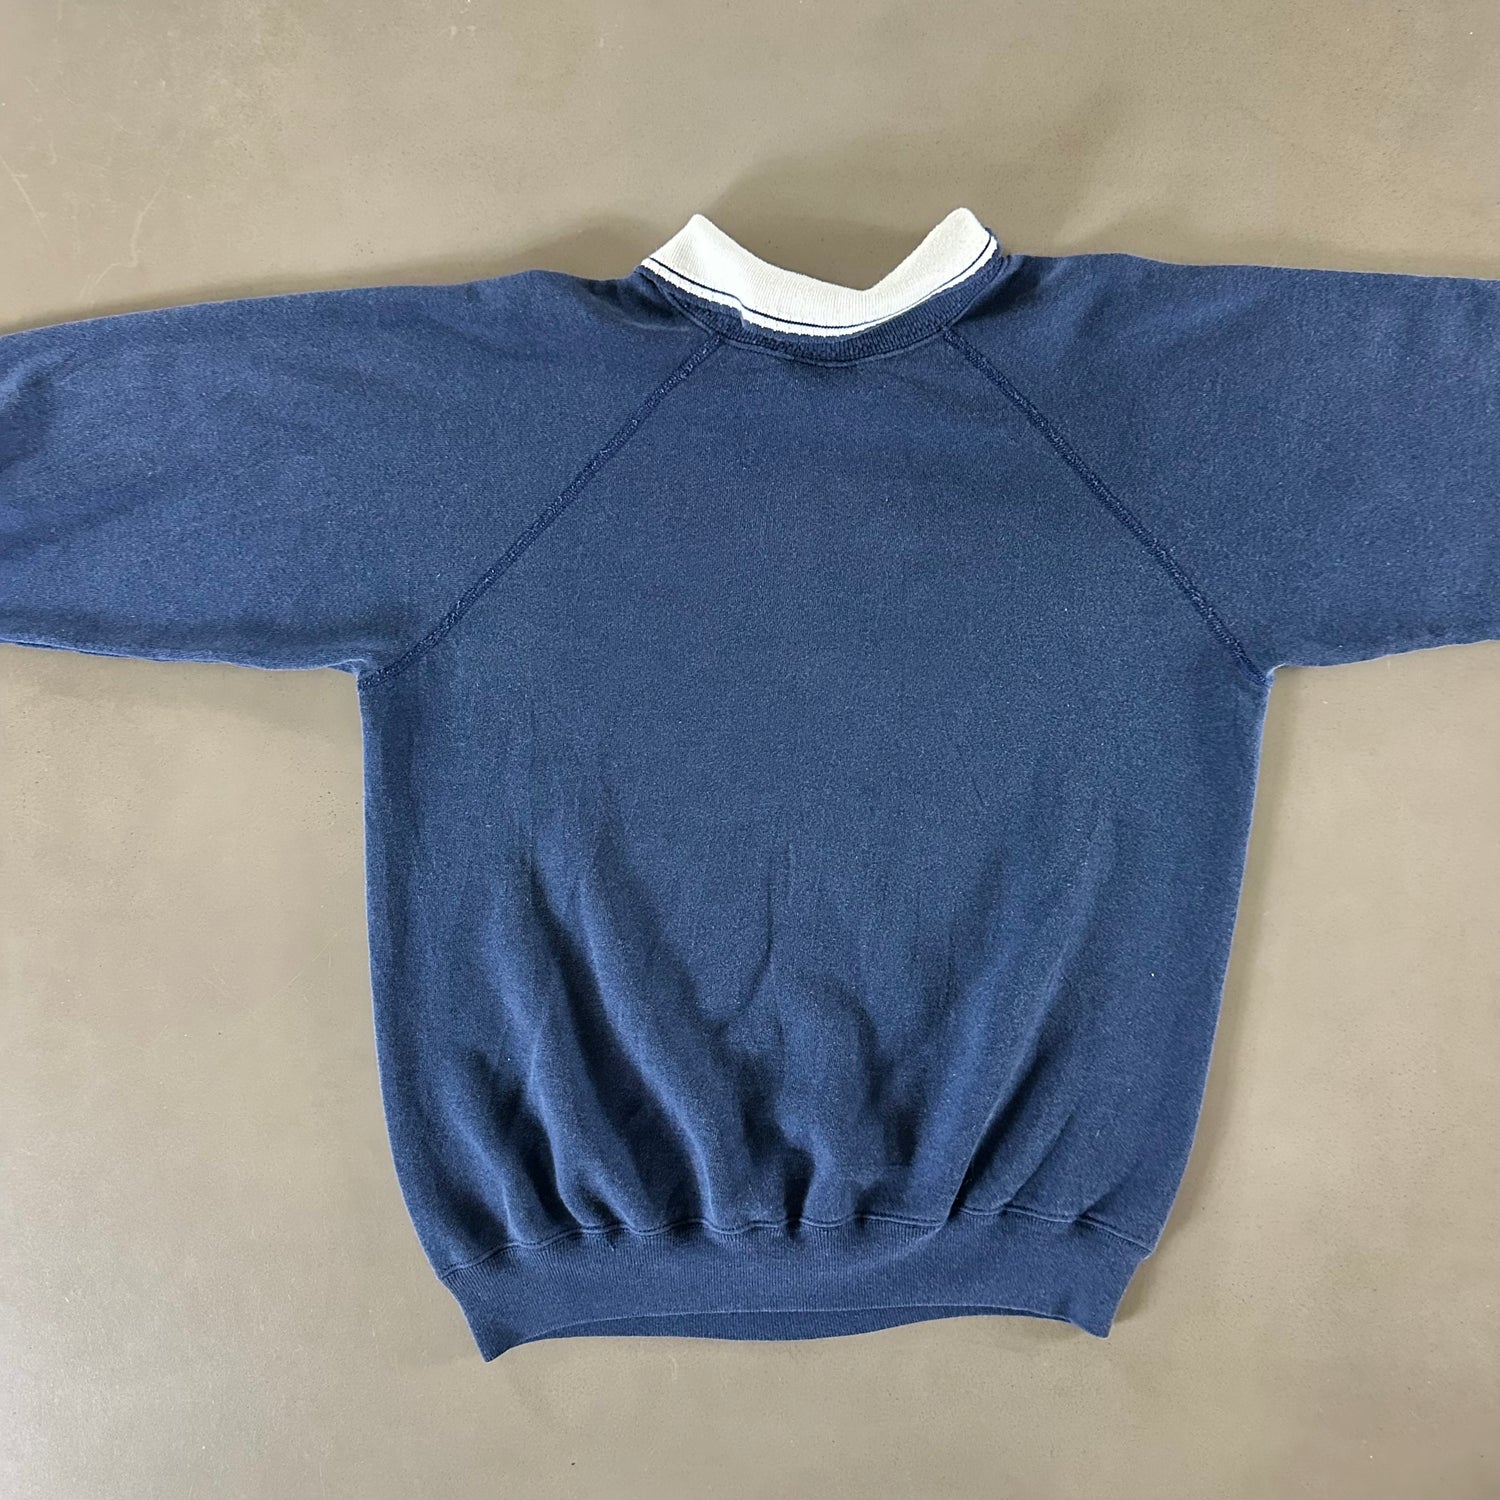 Vintage 1990s Morning Star Sweatshirt size Large